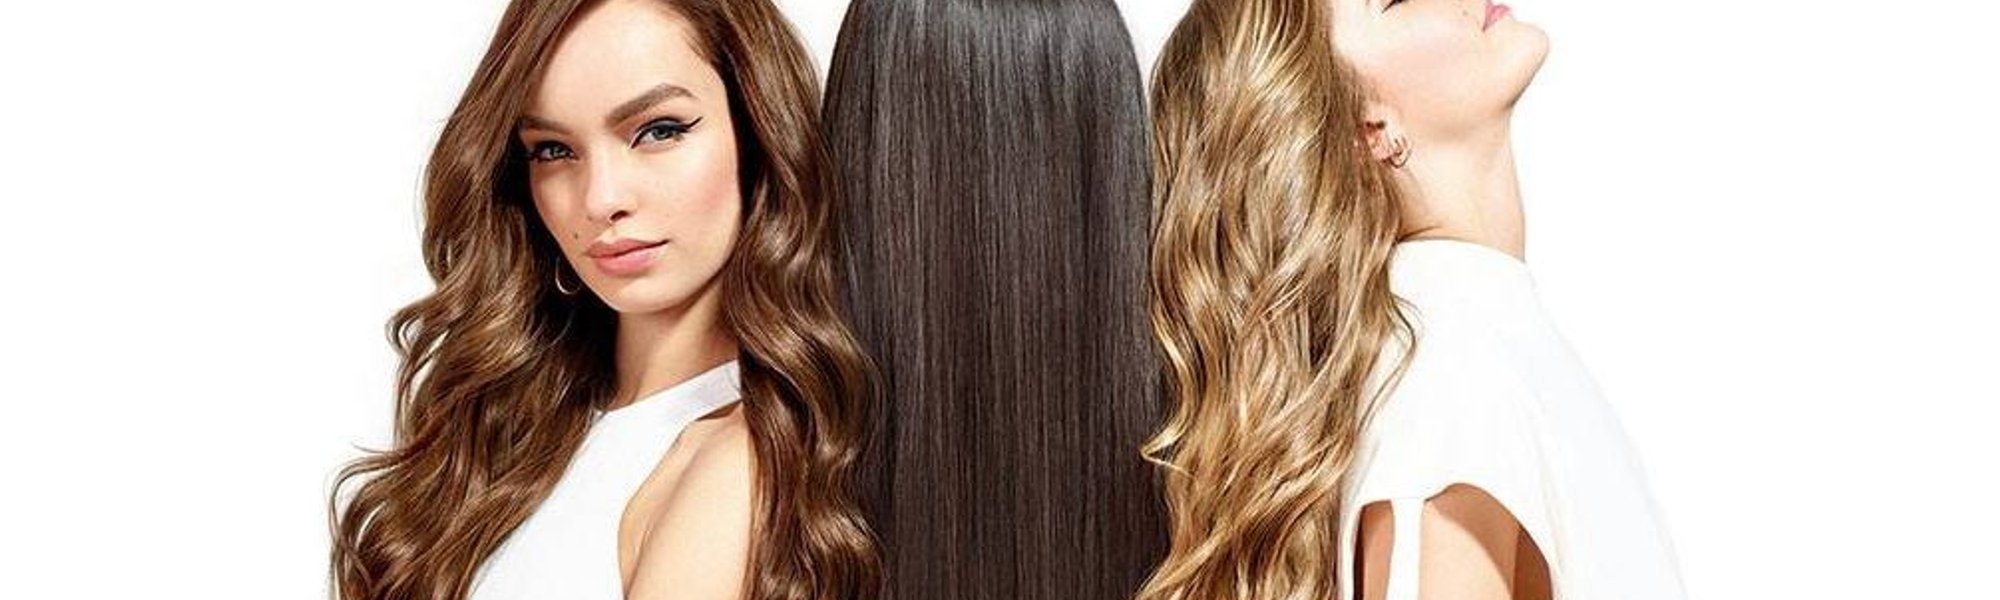 Qué tipos de extensiones de pelo son mejores | L’Oréal Paris